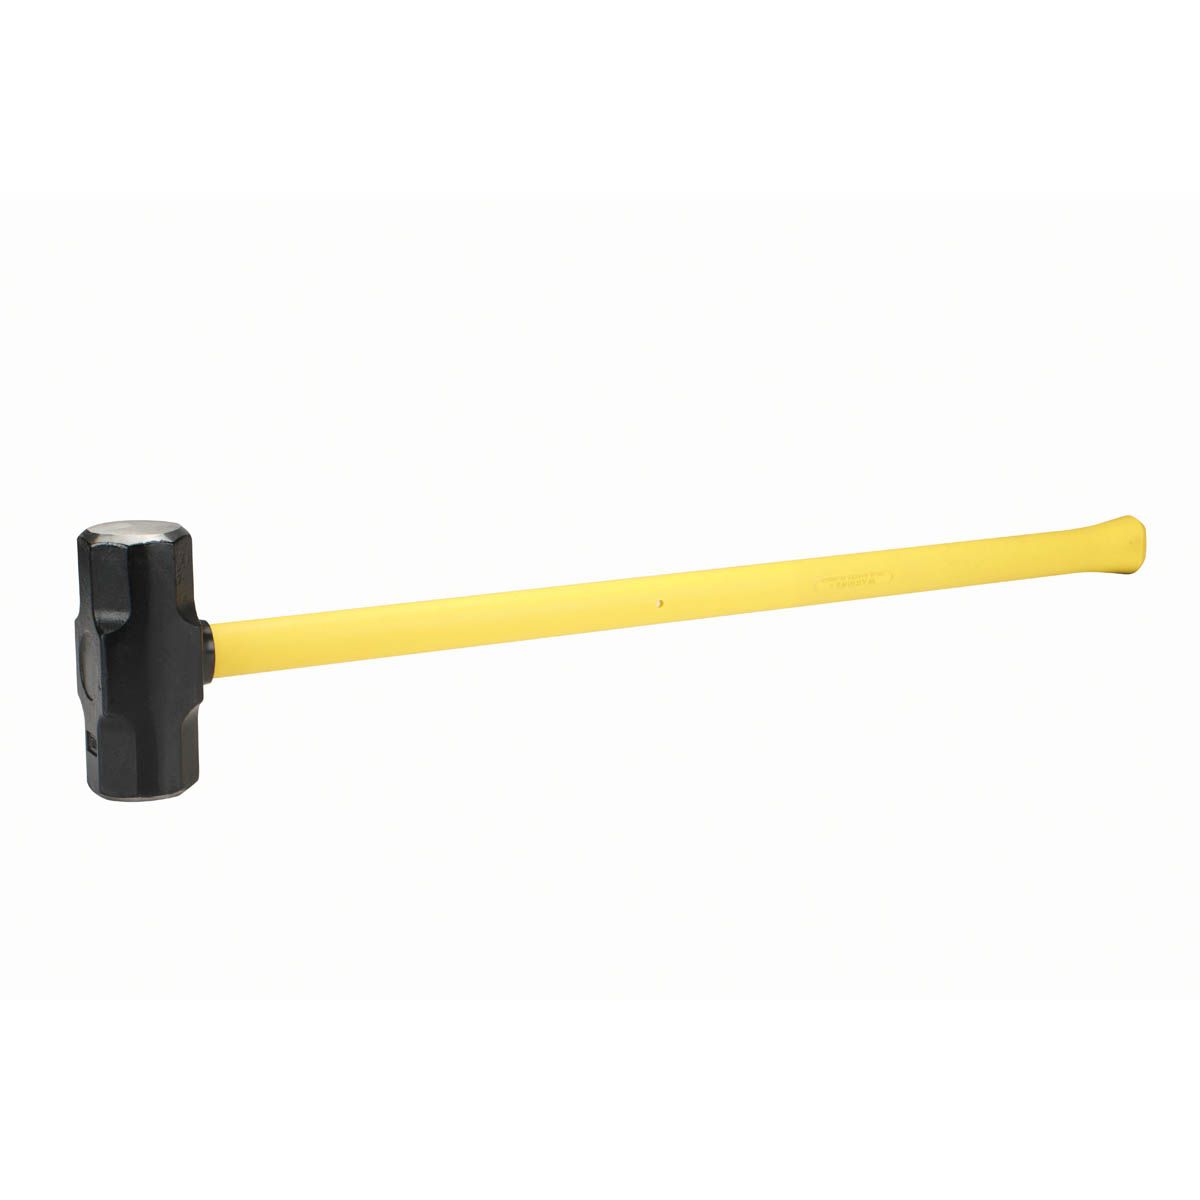 PITTSBURGH 10 lb. Fiberglass Sledge Hammer